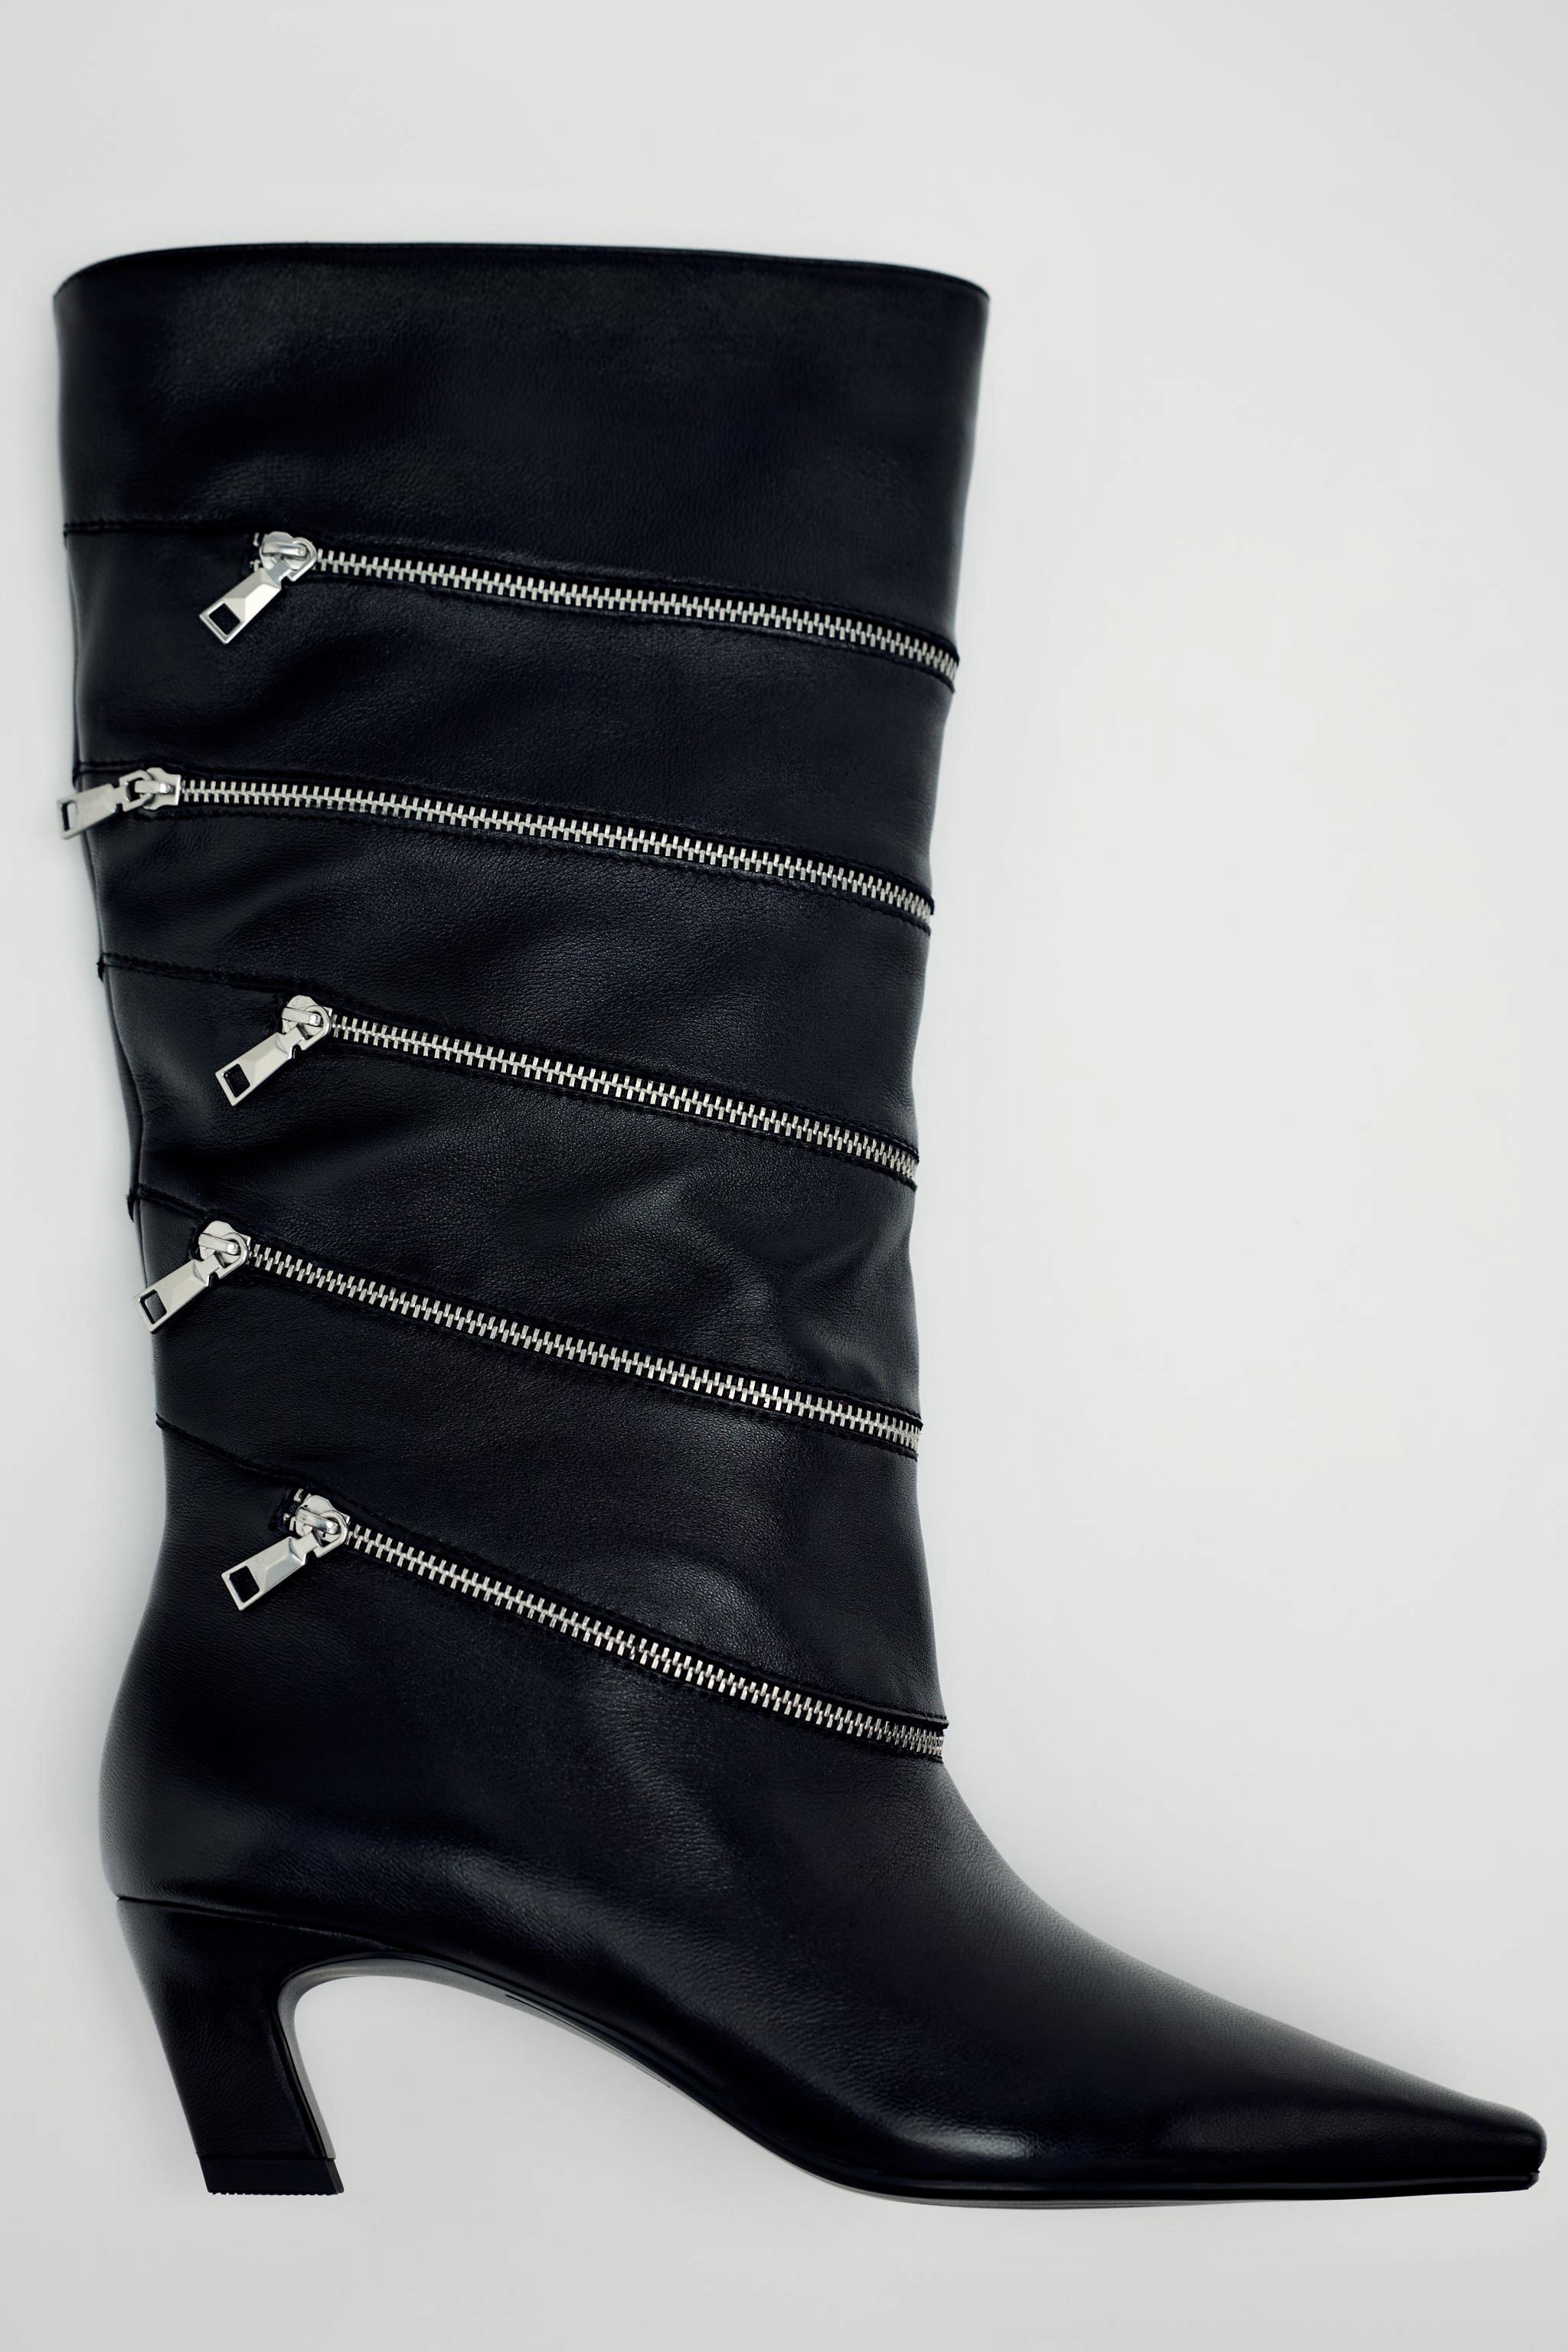 Zara + Soft Leather Zipped Boots